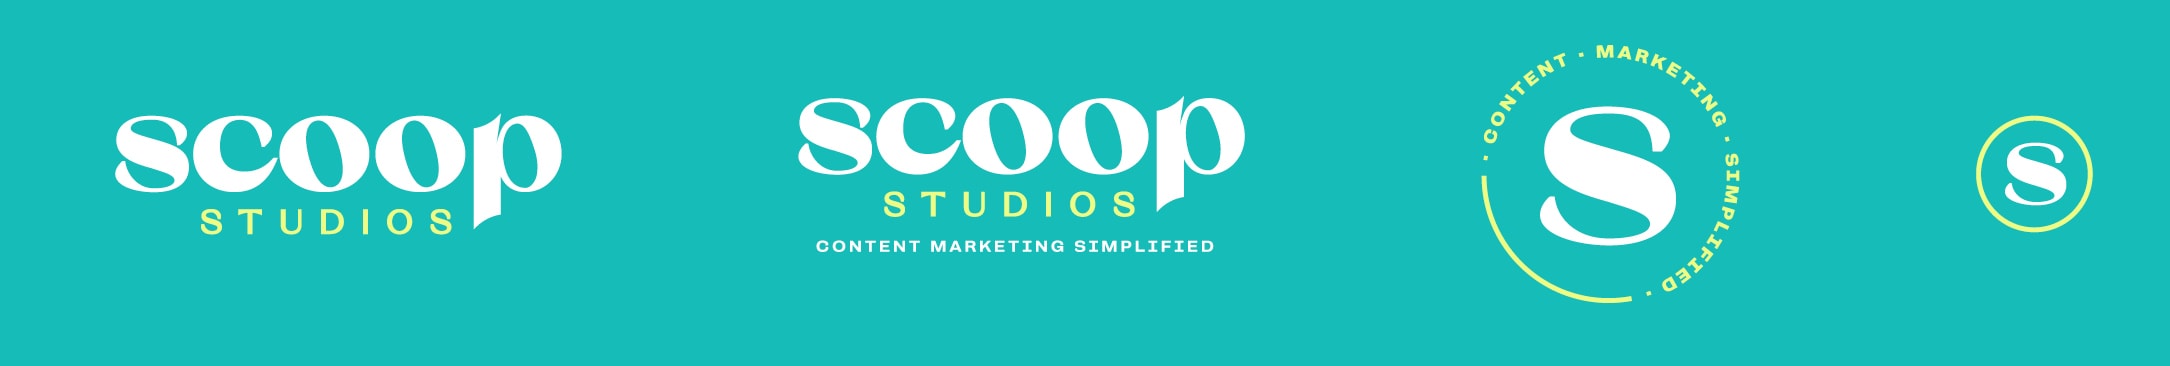 Scoop Logos - Playful Modern Branding Design_1